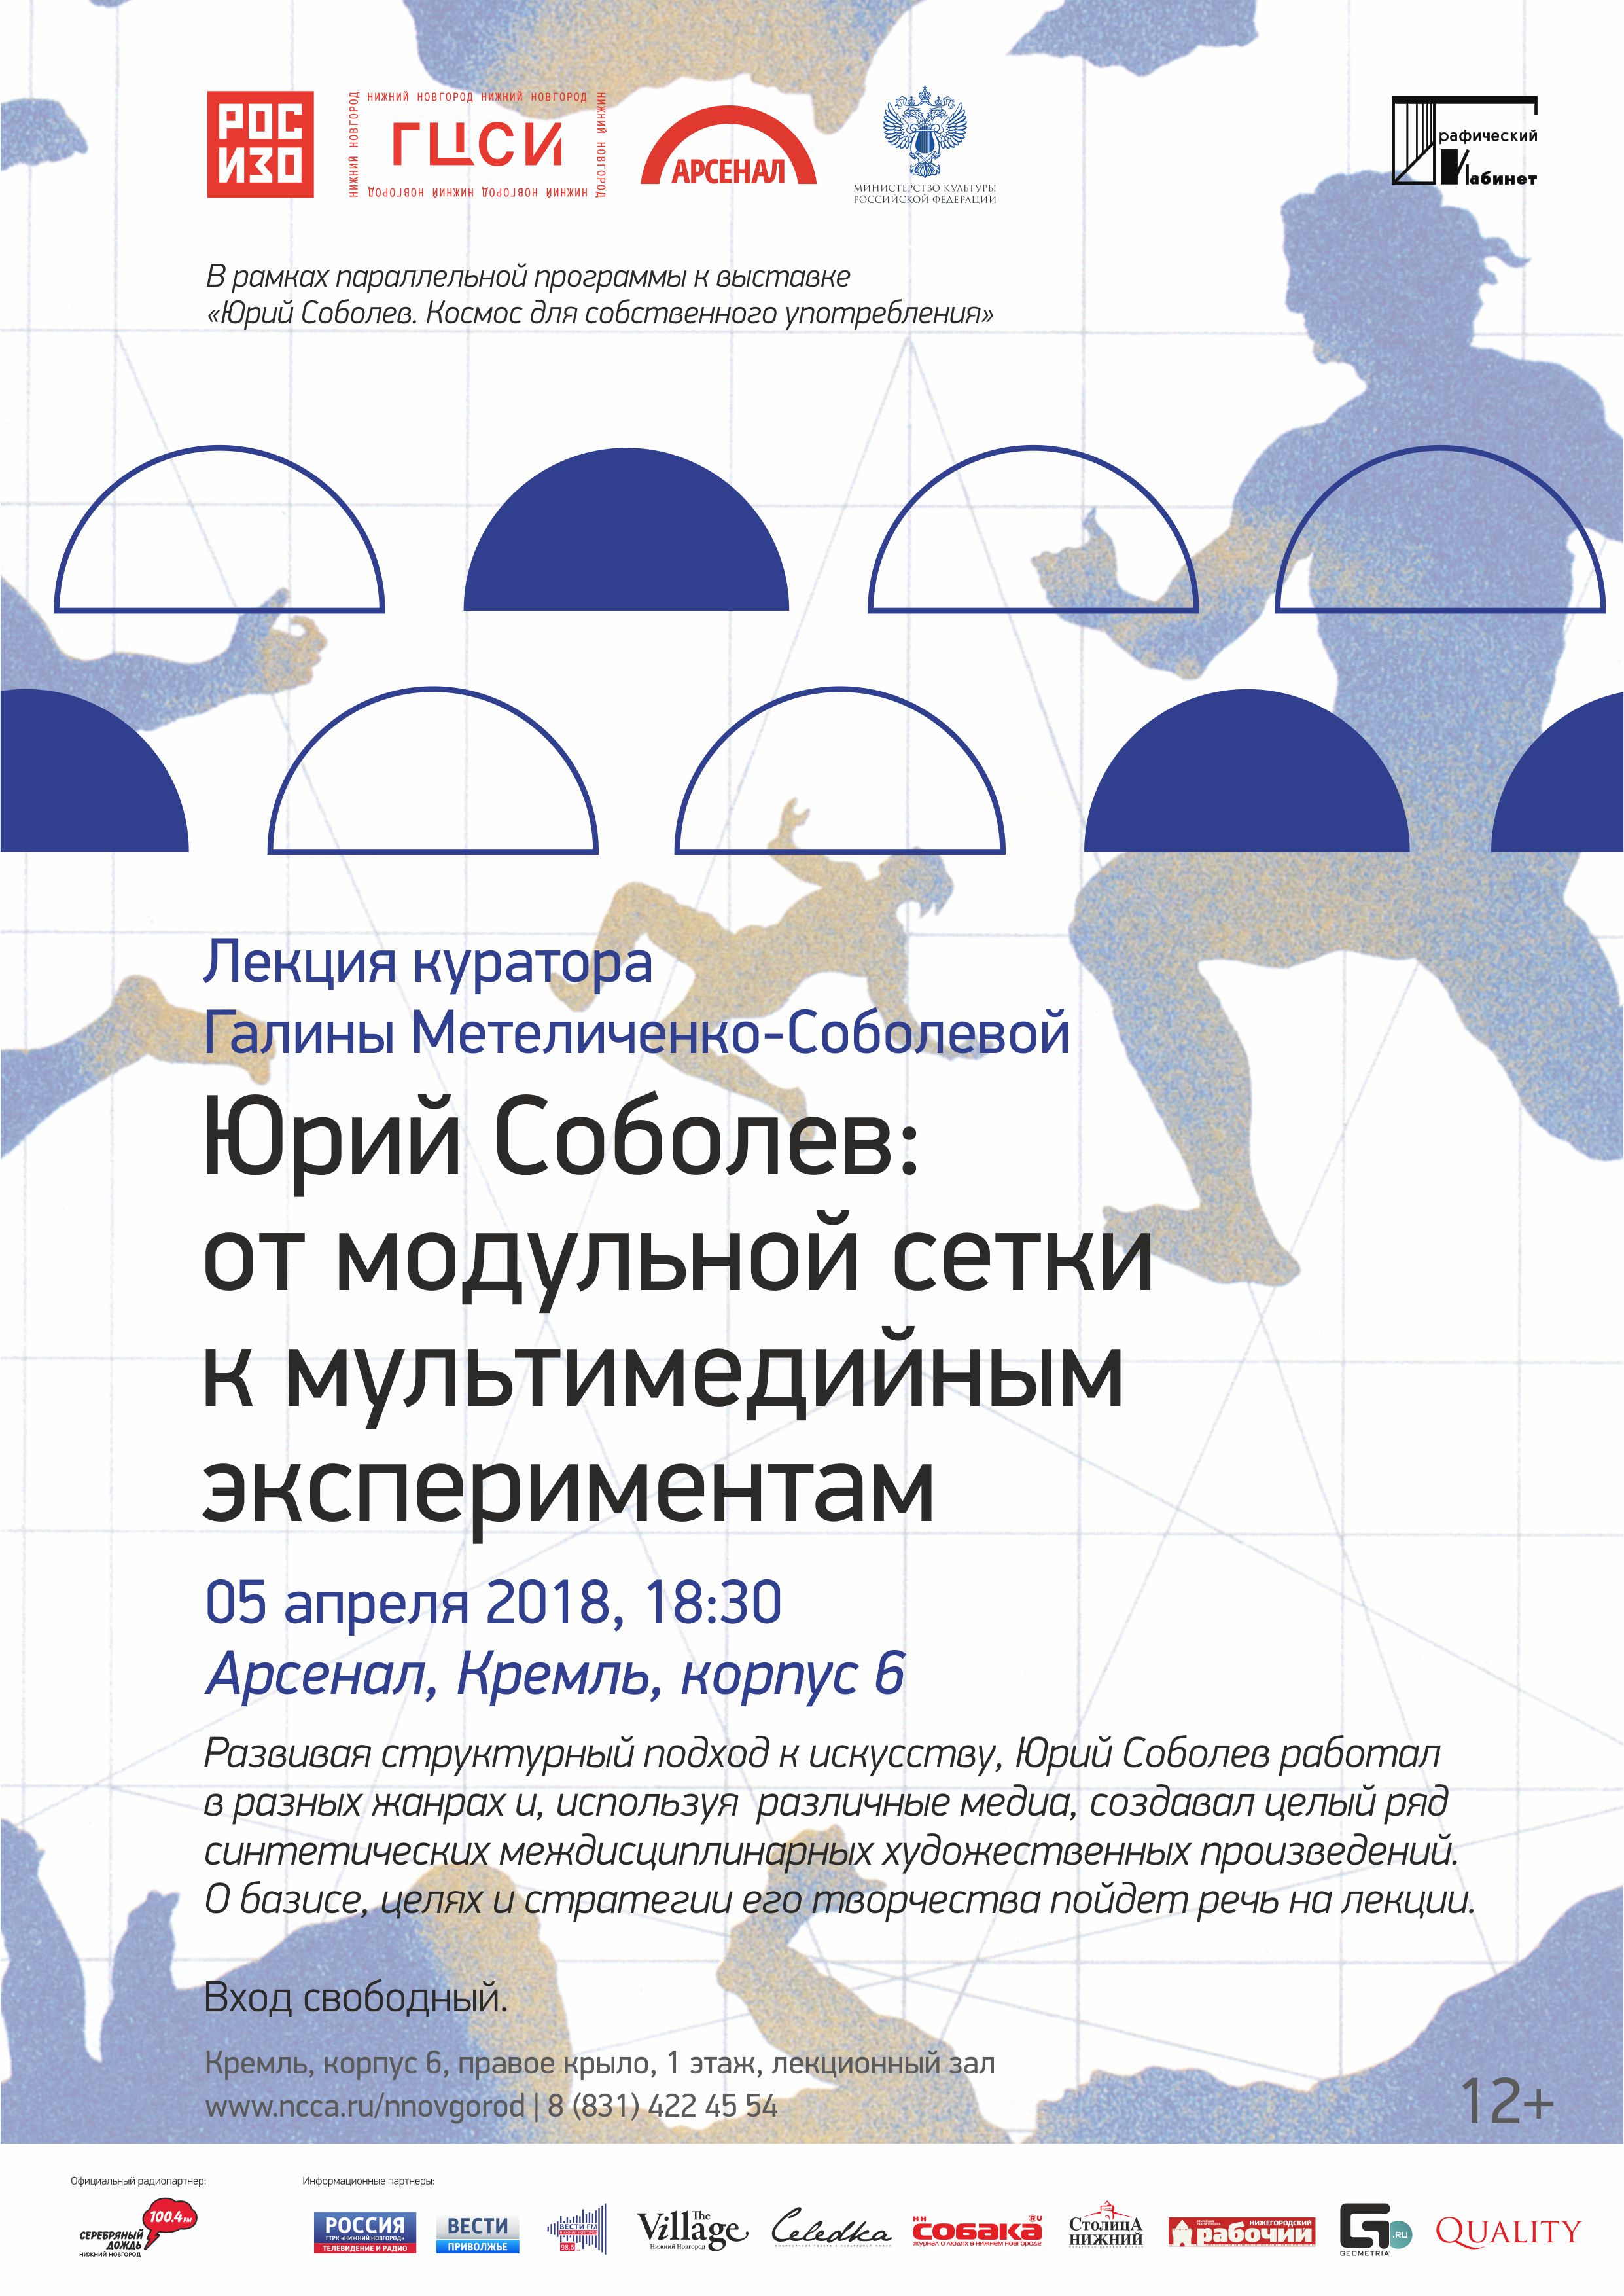 Lecture Galina Metelichenko-Soboleva “Yuri Sobolev: from the modular grid to multimedia experiments”